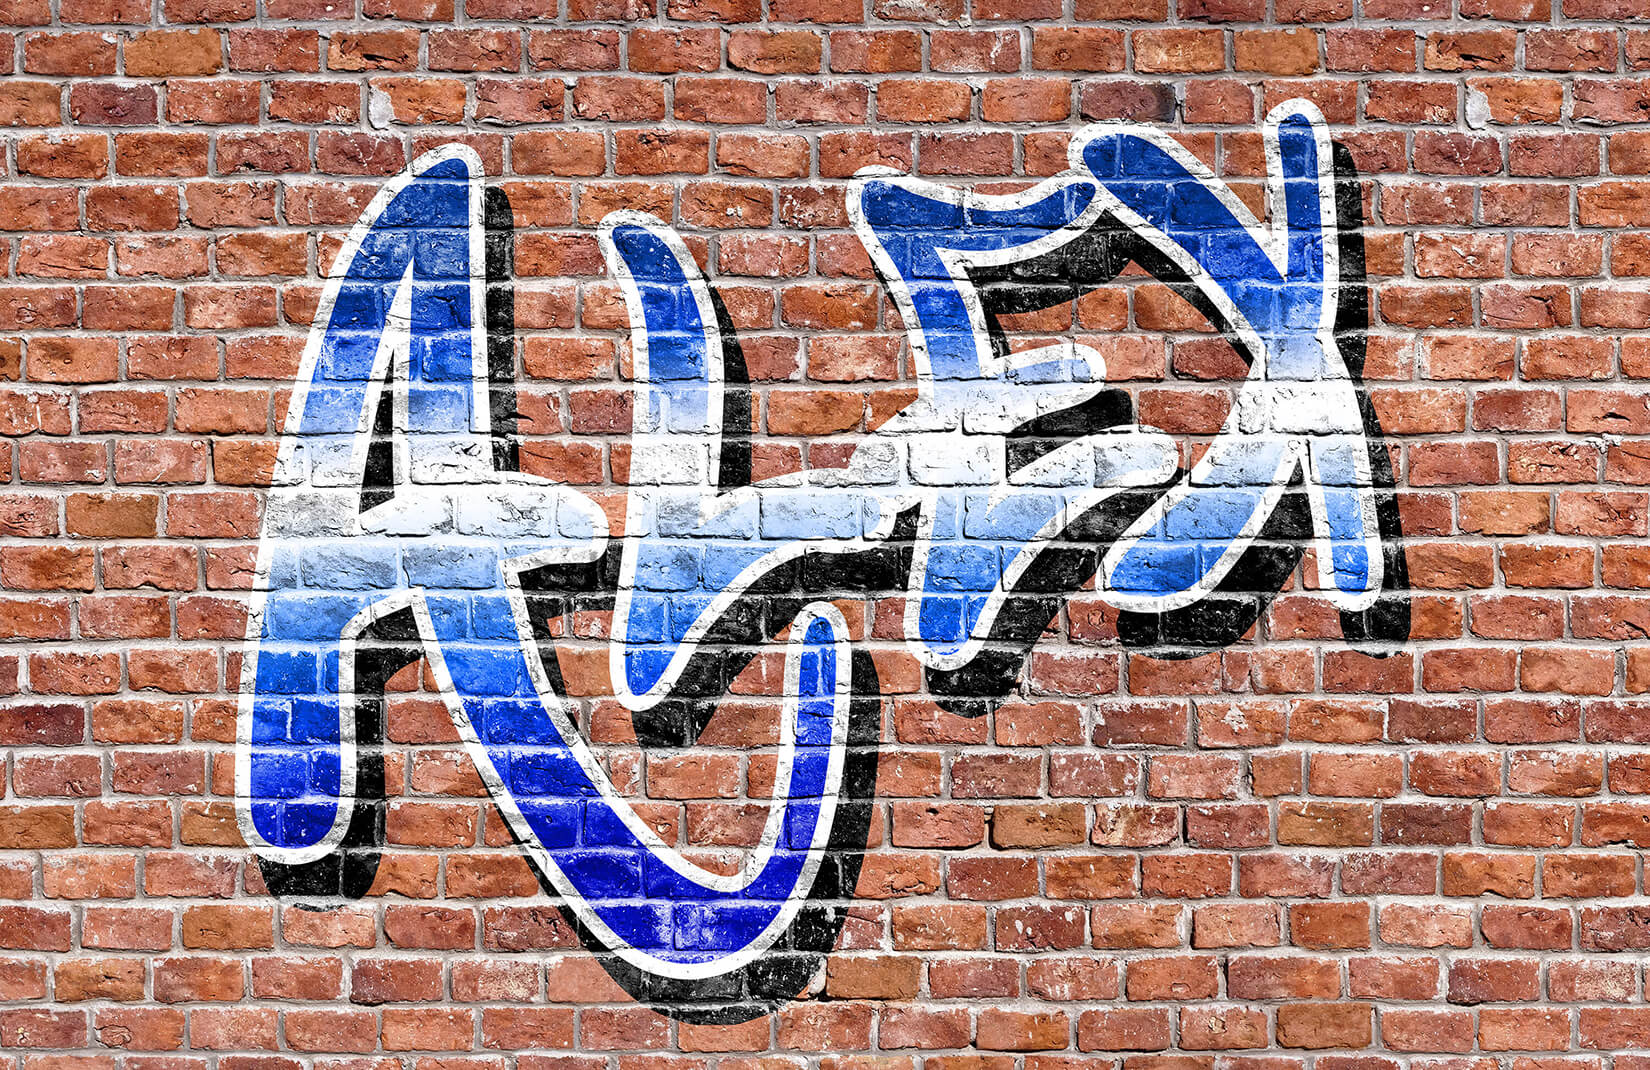 Custom Name Graffiti Wallpaper Mural Muralswallpaper Download, share or upload your own one! custom name graffiti wallpaper mural